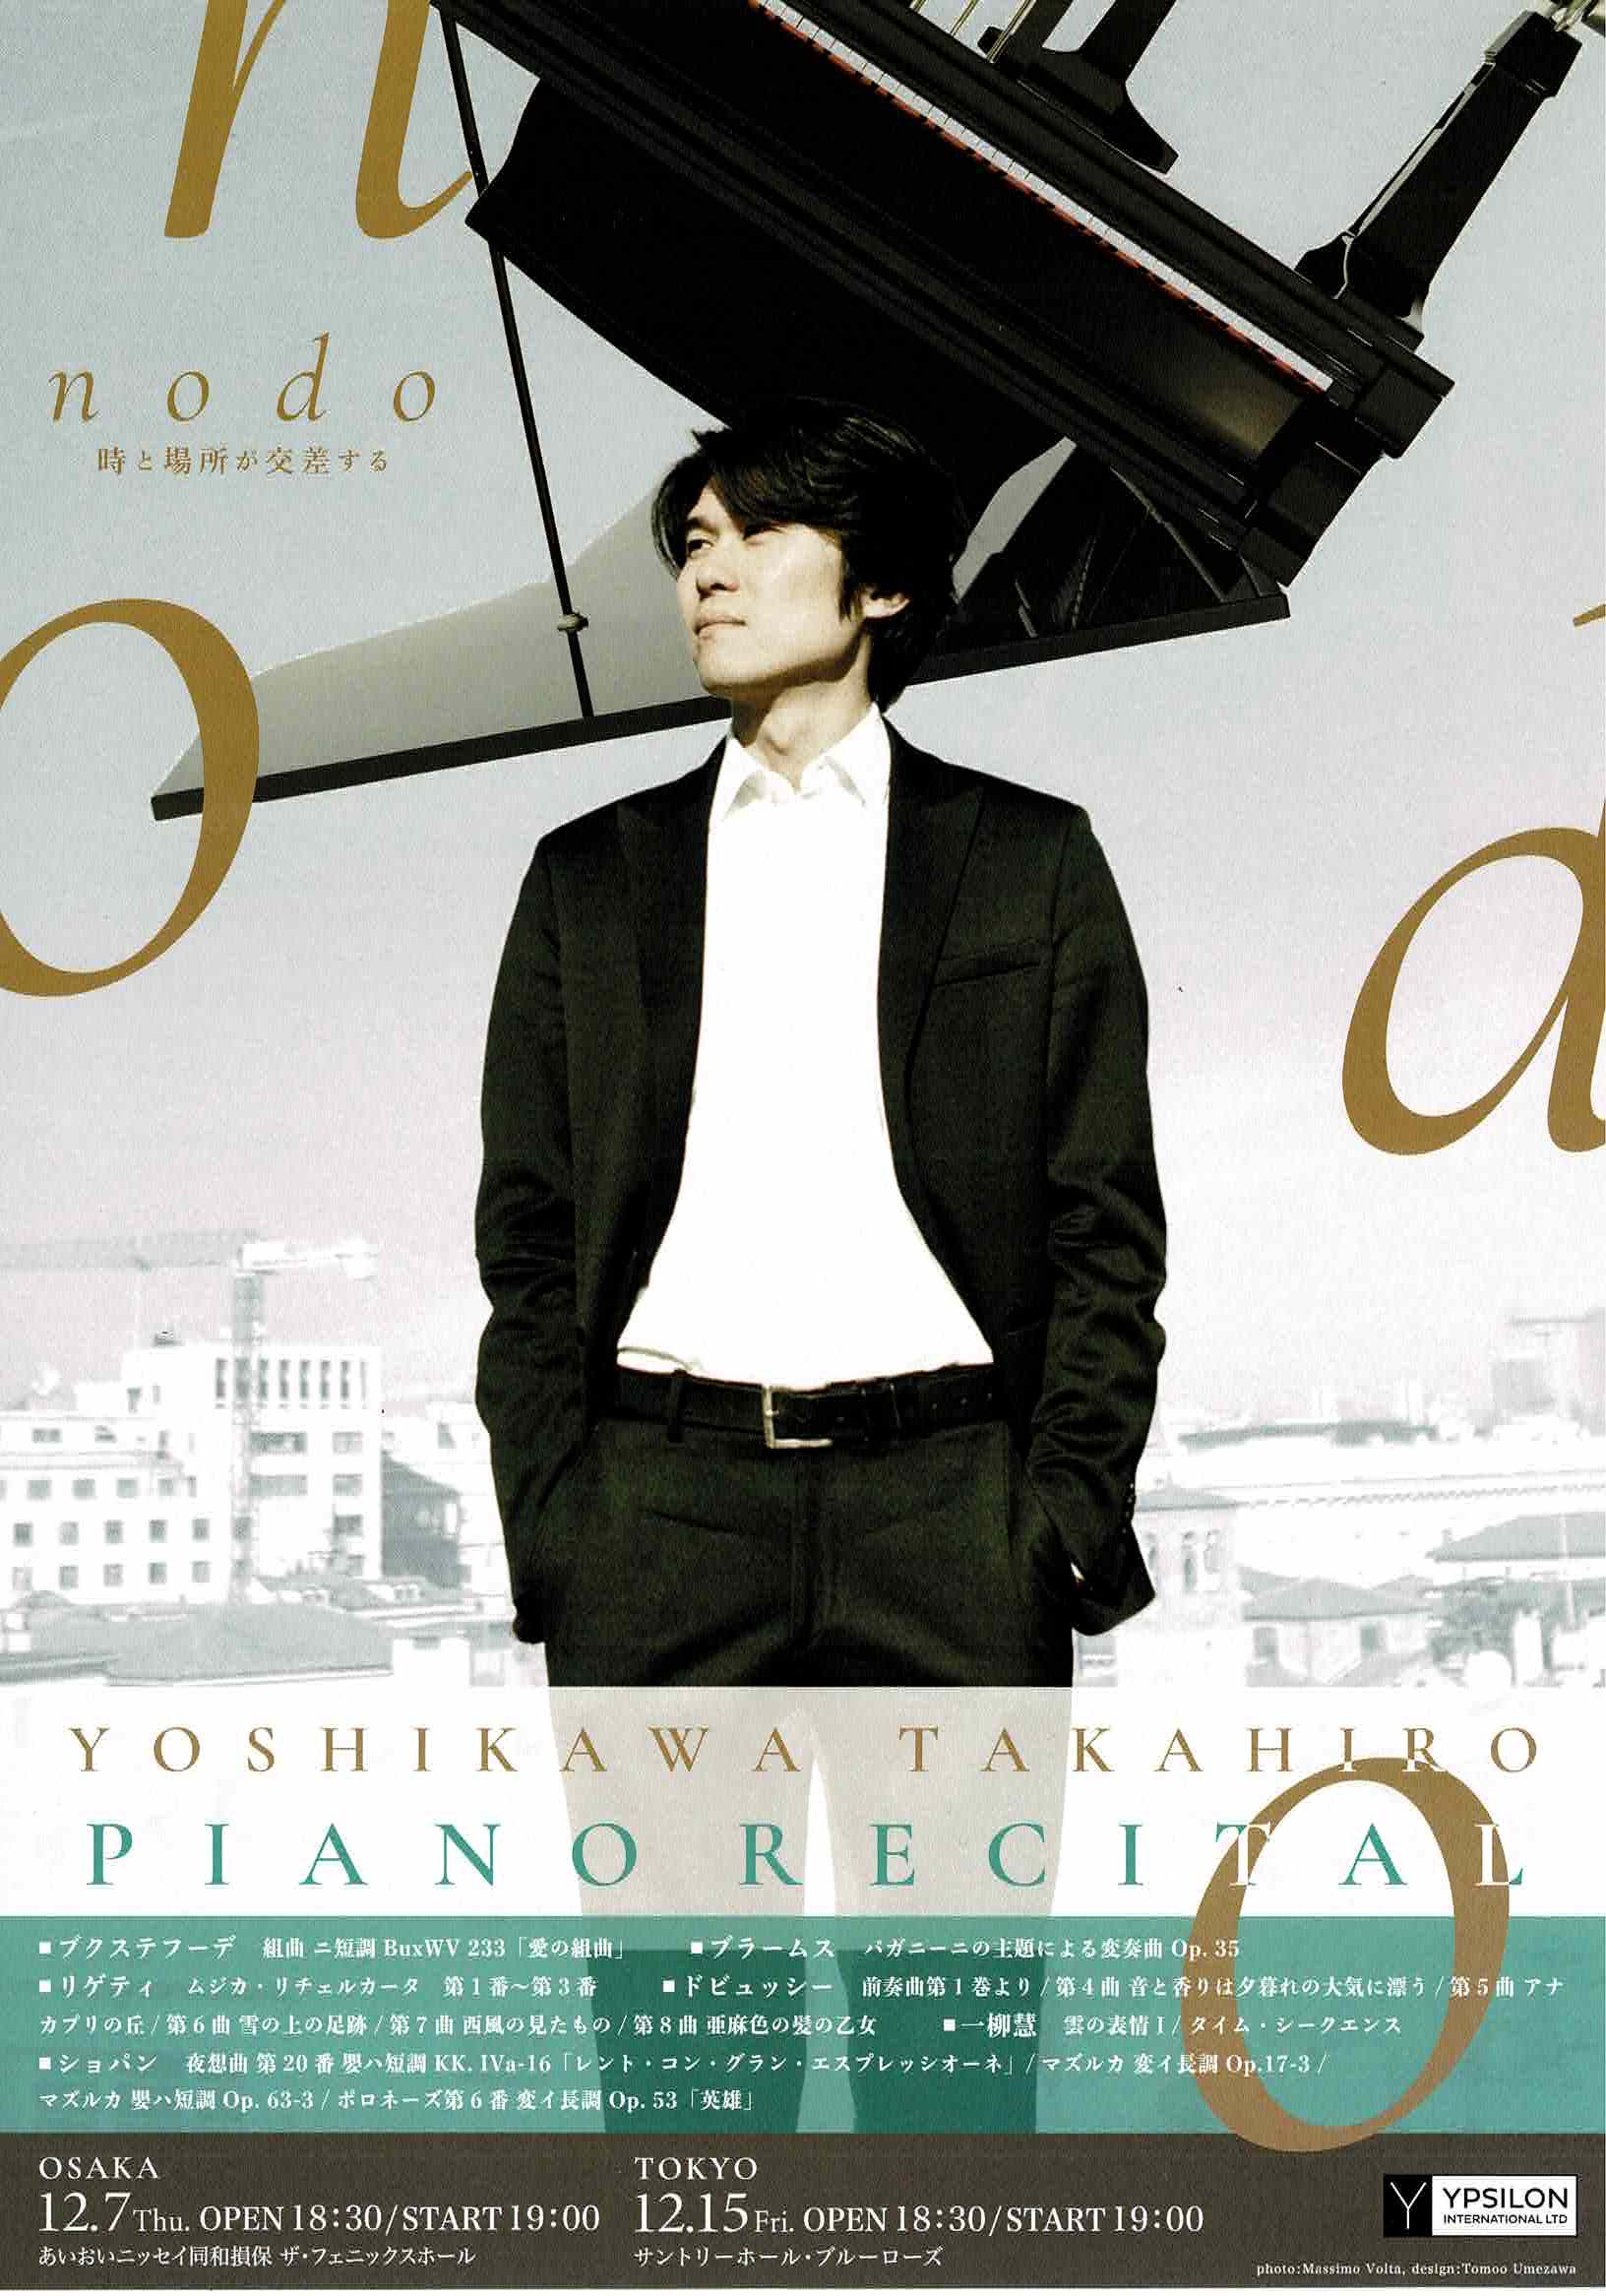 YOSHIKAWA TAKAHIRO PIANO RECITAL ~ nodo ~ 時と場所が交差する